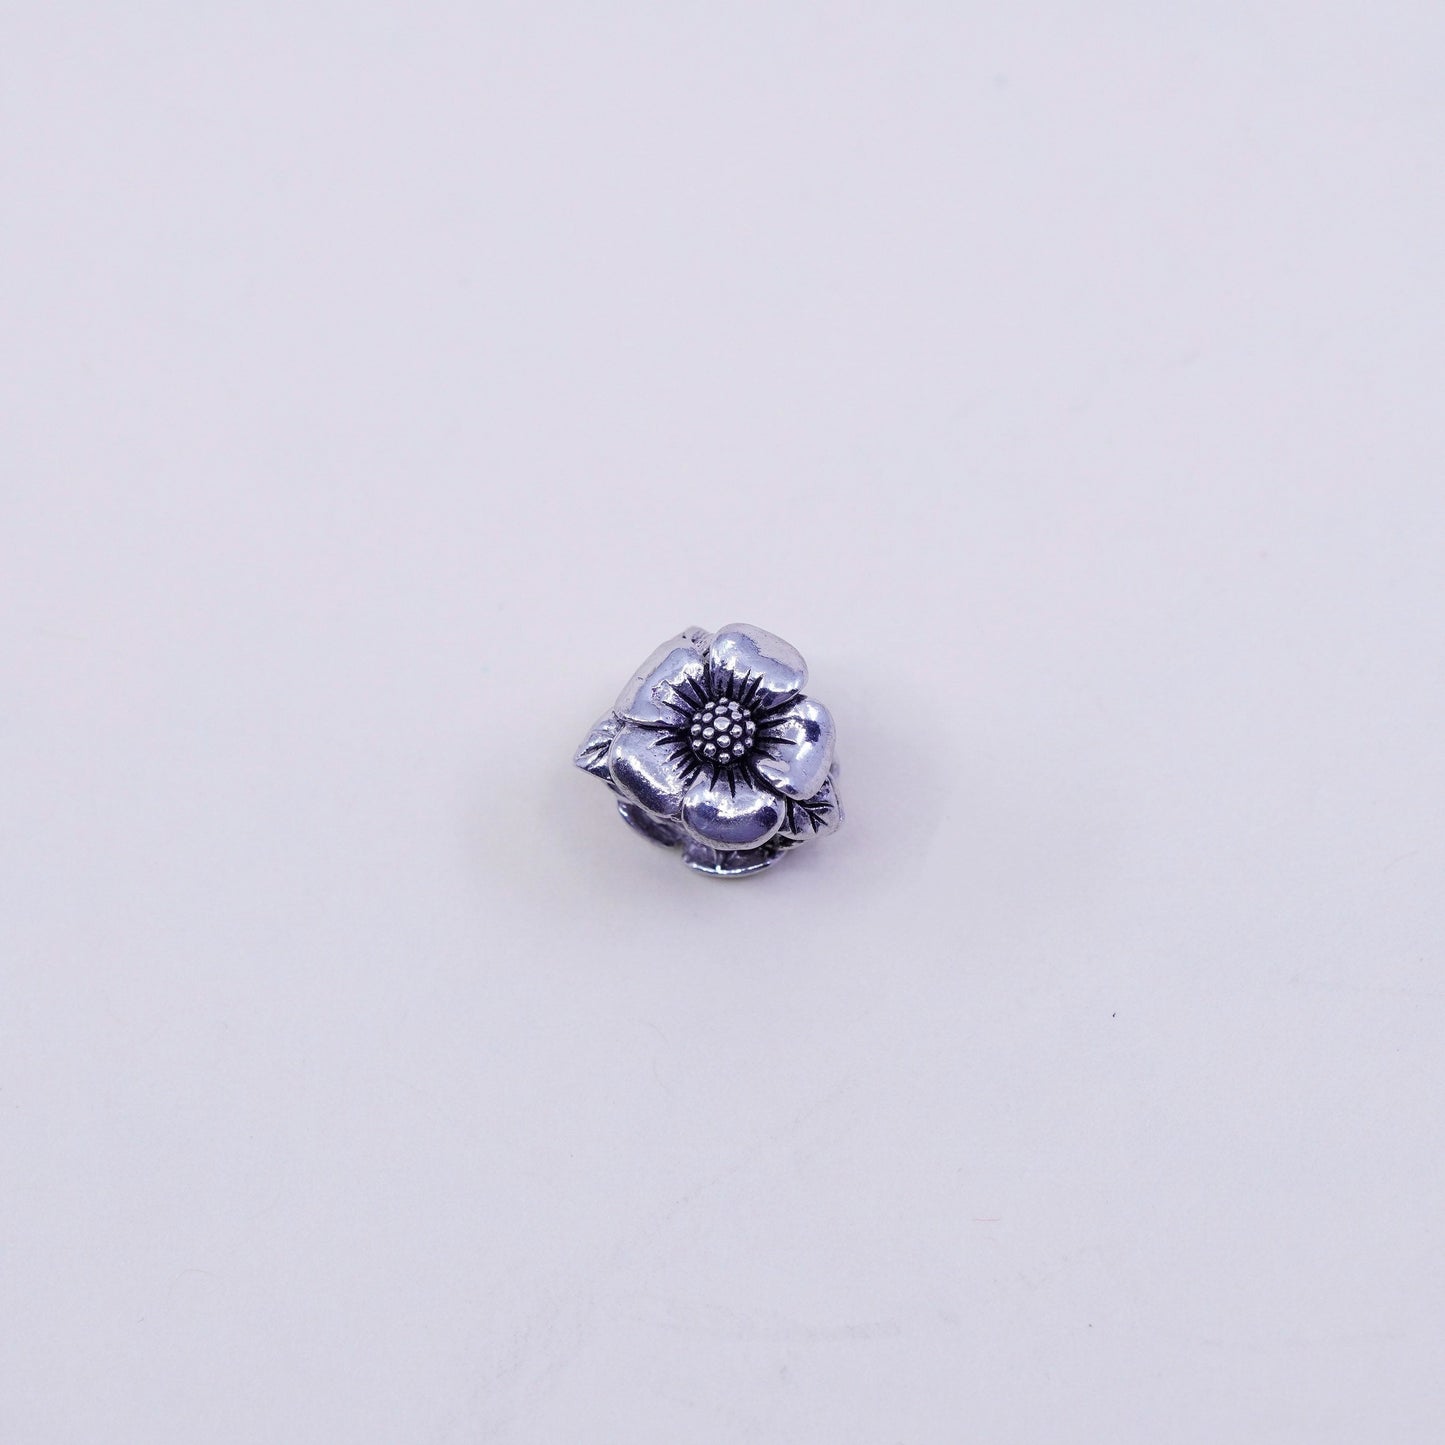 Vintage Sterling silver handmade flower pendant, 925 bead charm